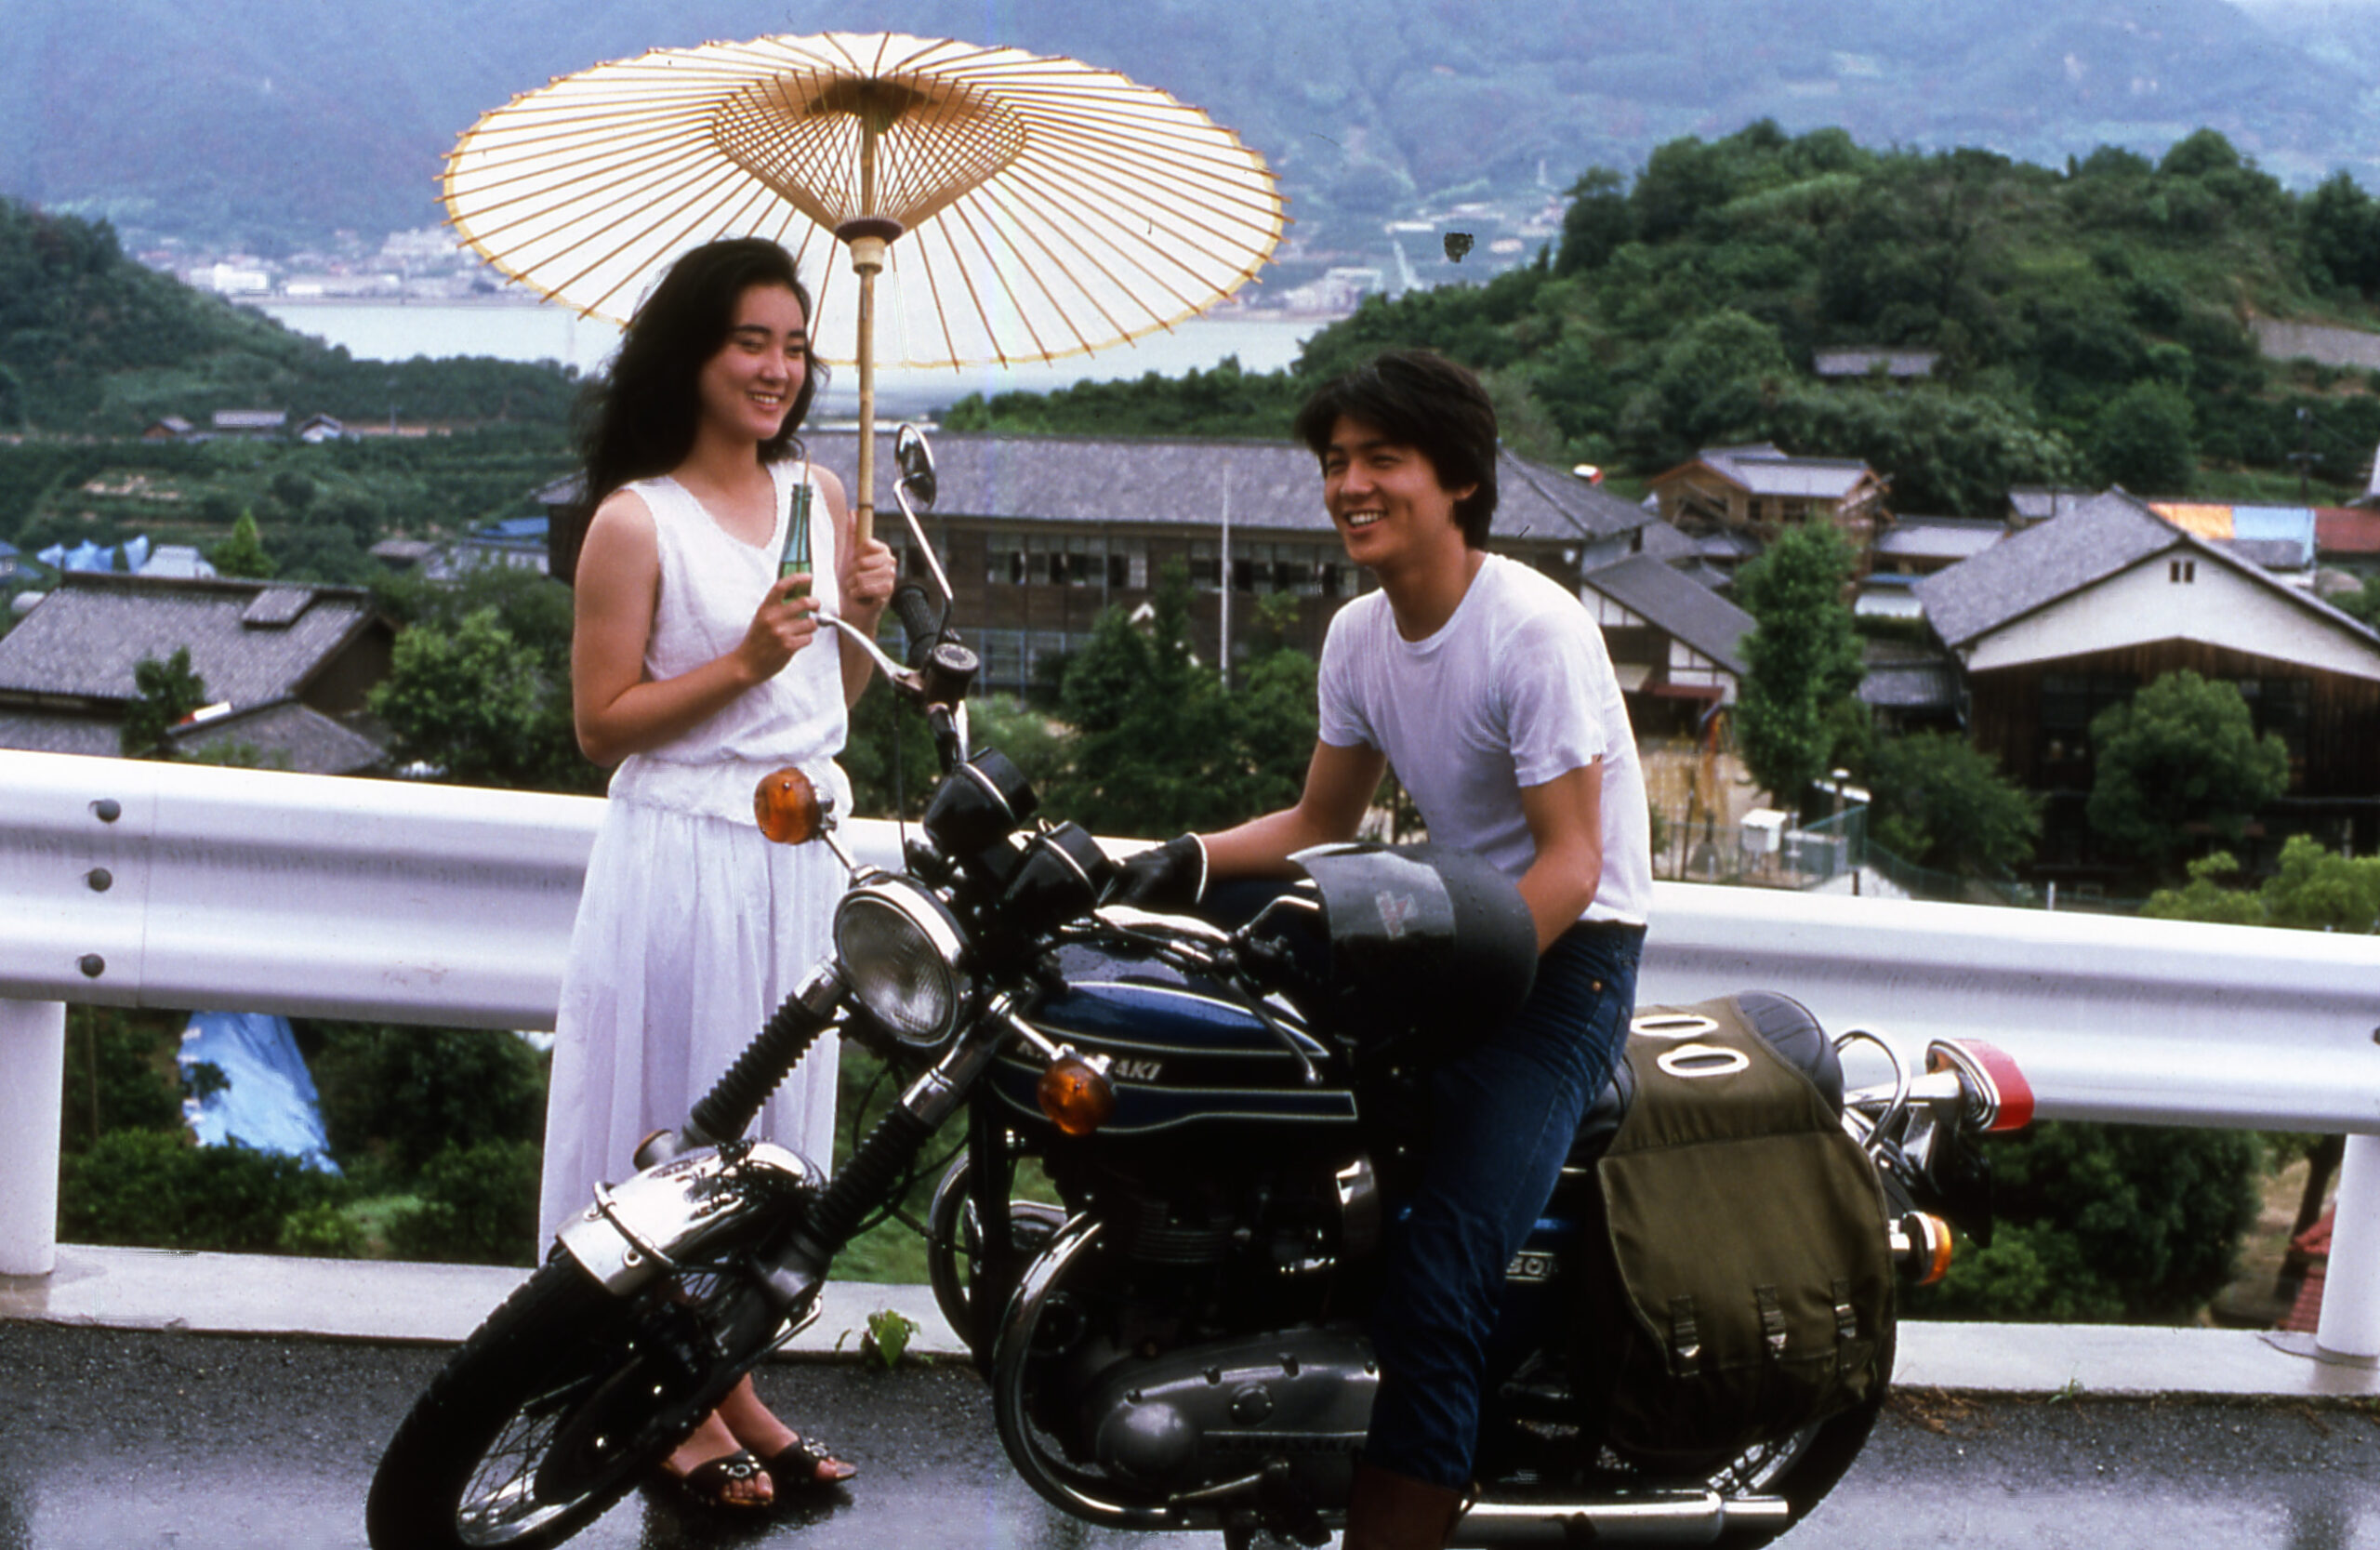 His Motorbike, Her Island (1986)